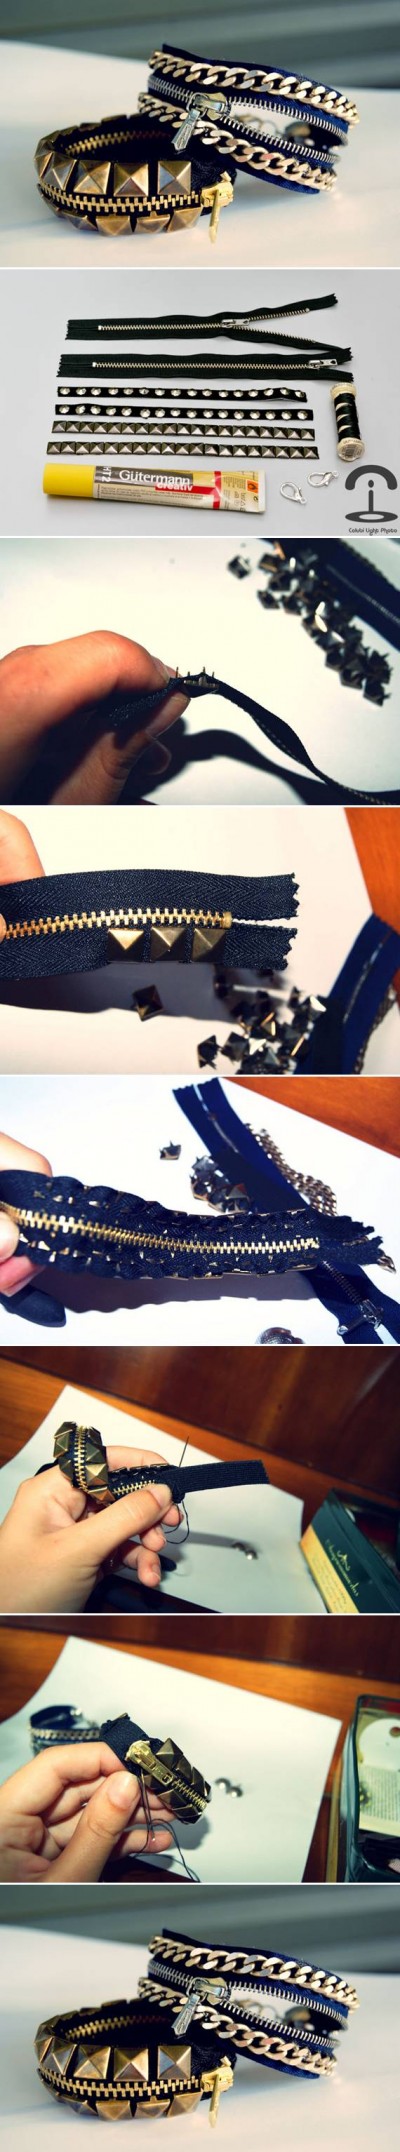 cool studded bracelet from zipper tutorial